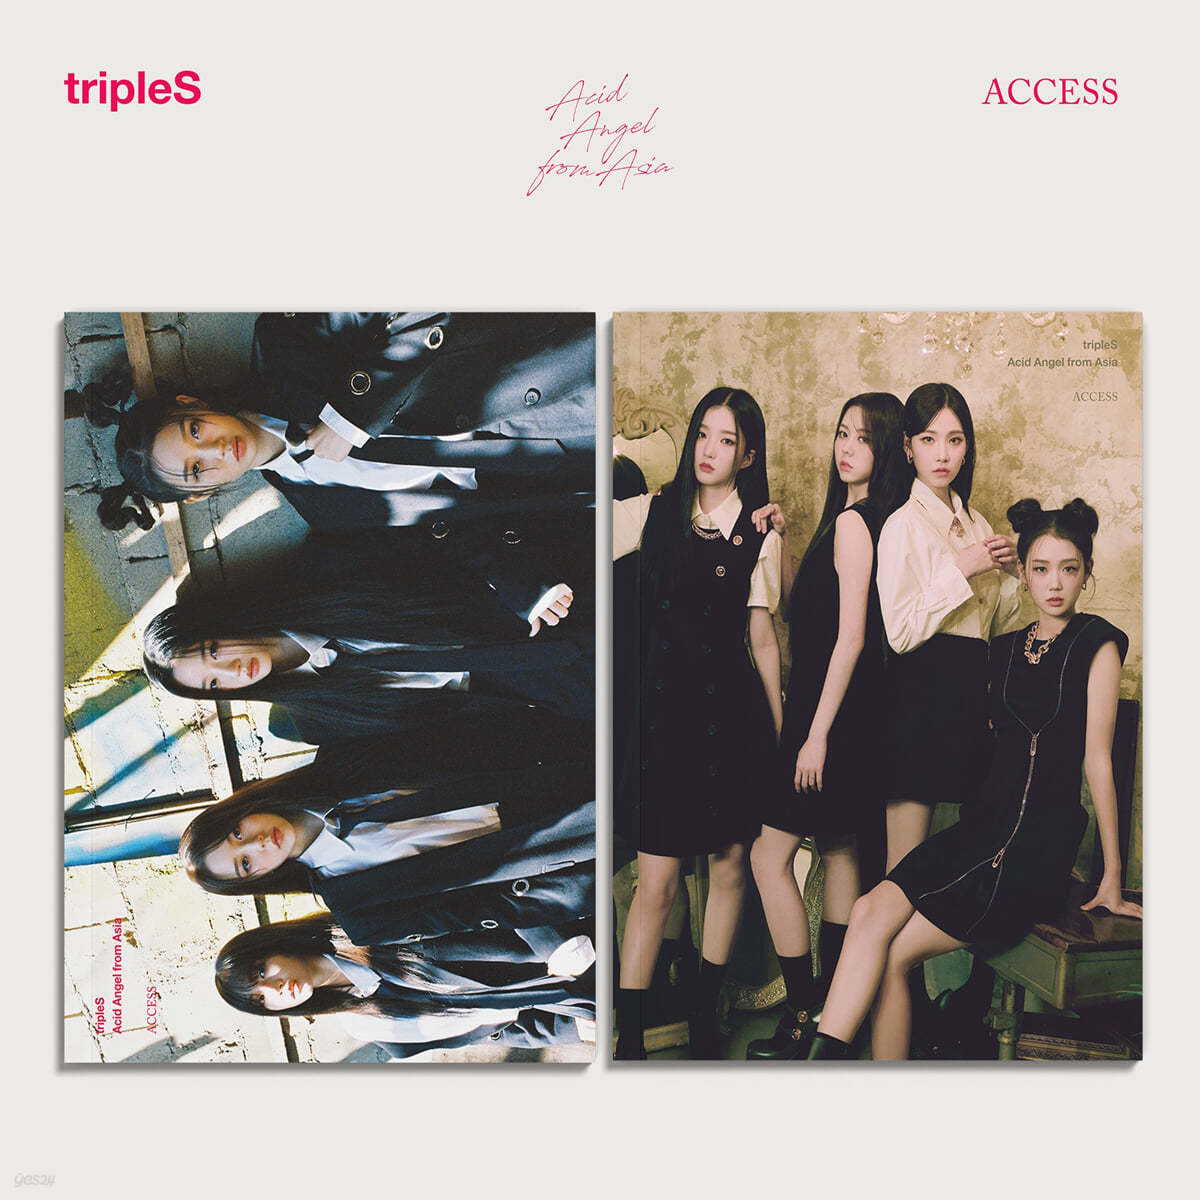 tripleS (트리플에스) - Acid Angel from Asia  [A + B SET]